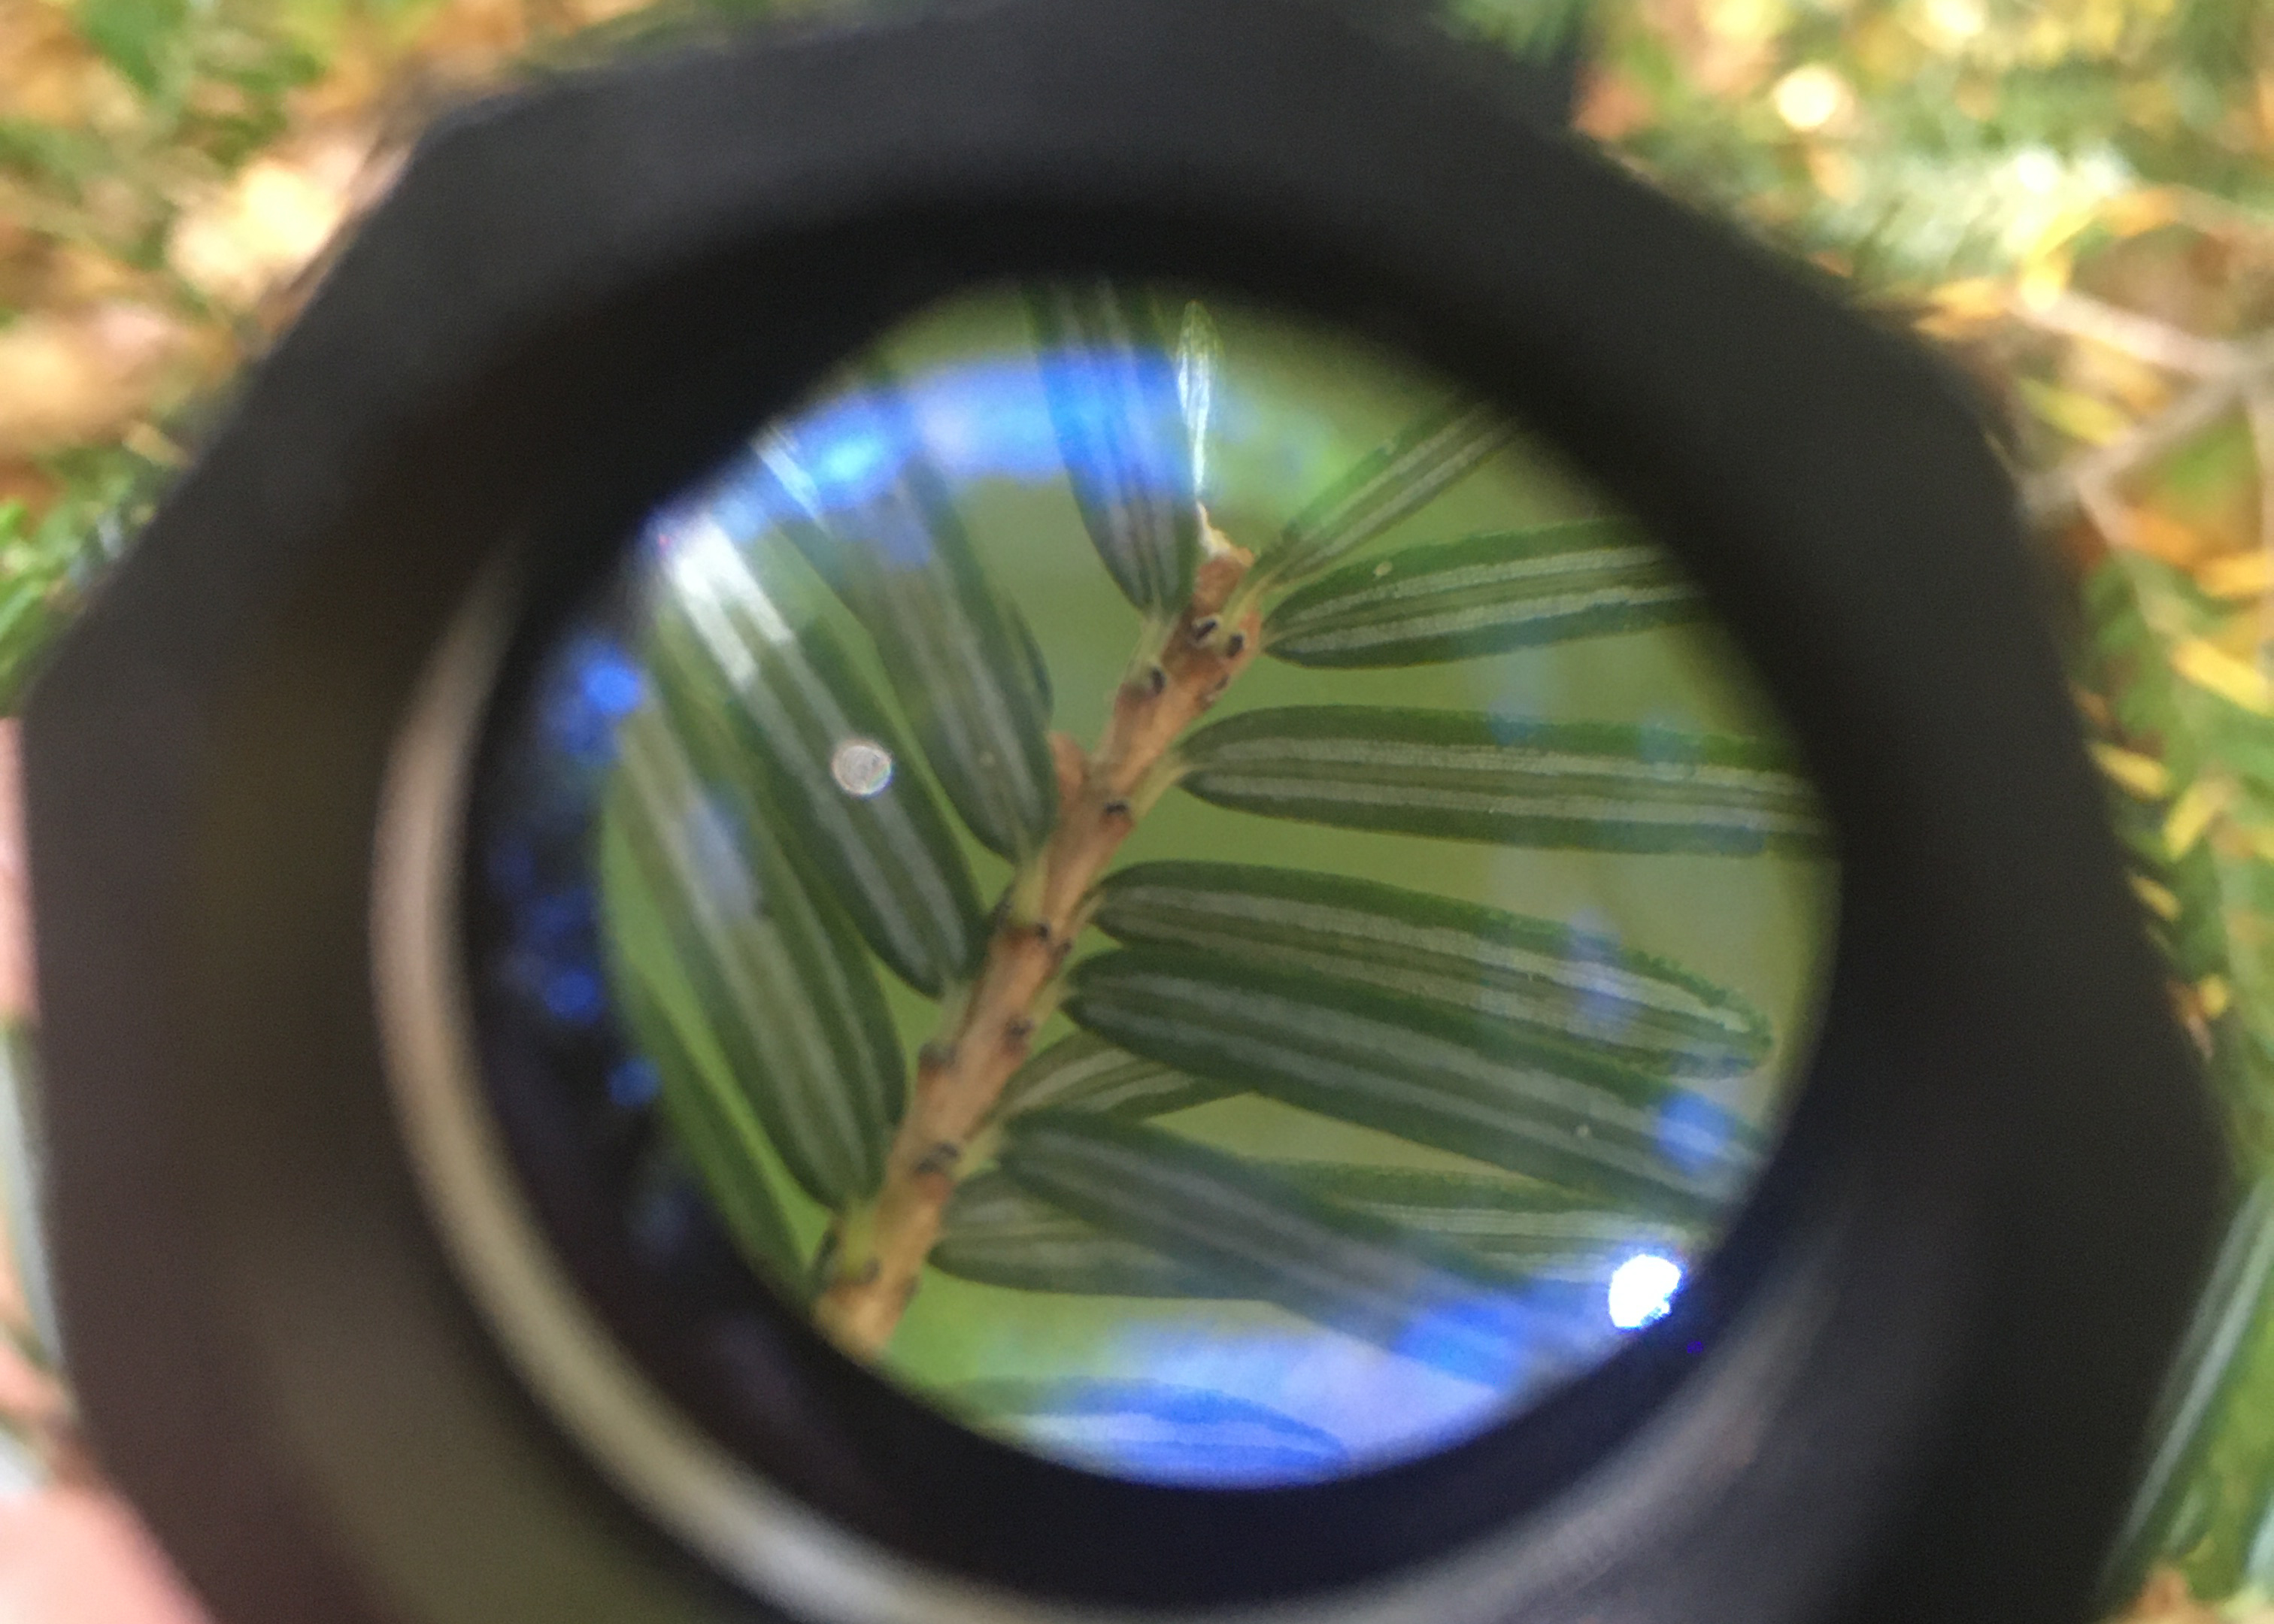 Closeup view of hemlock needles through a magnifying lens